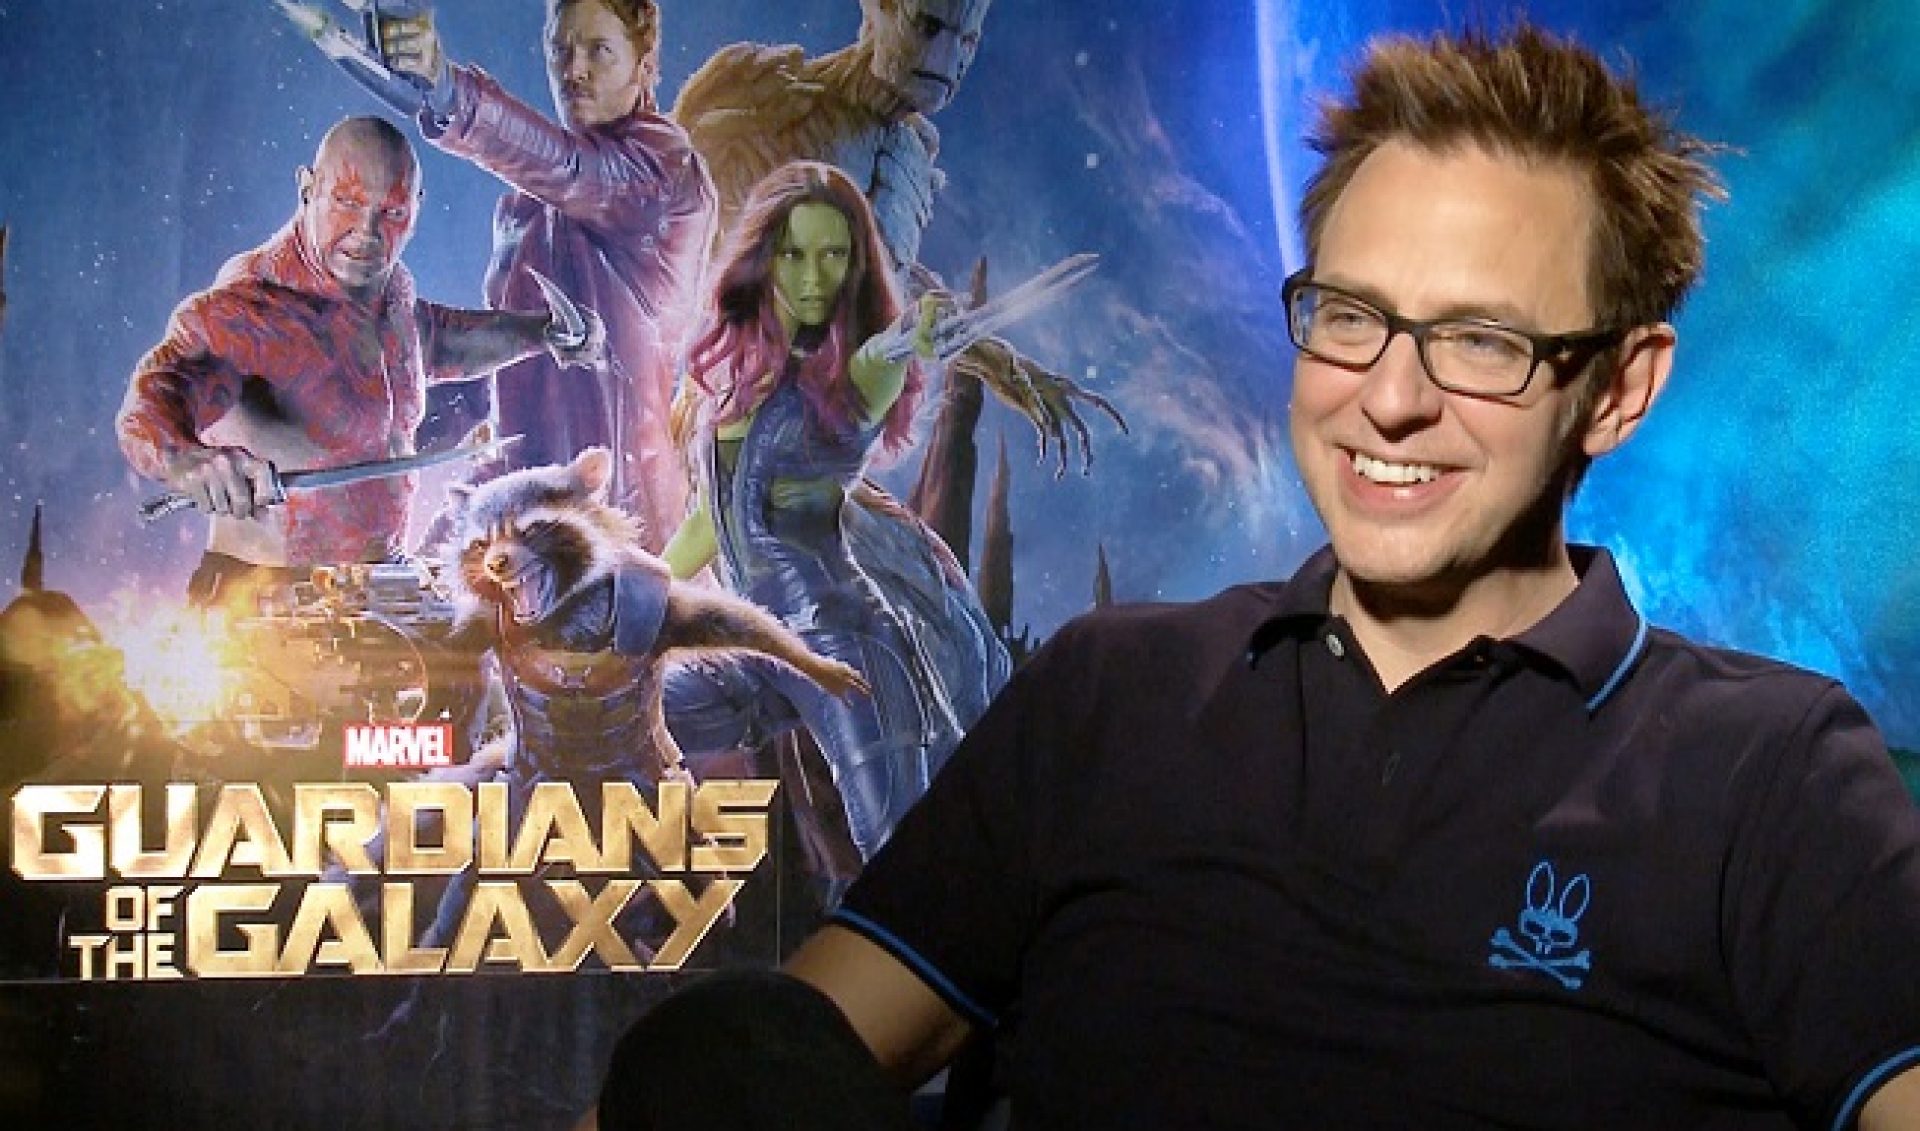 James Gunn Revealed ‘Guardians Of The Galaxy 2’ Details Via Periscope Live Stream